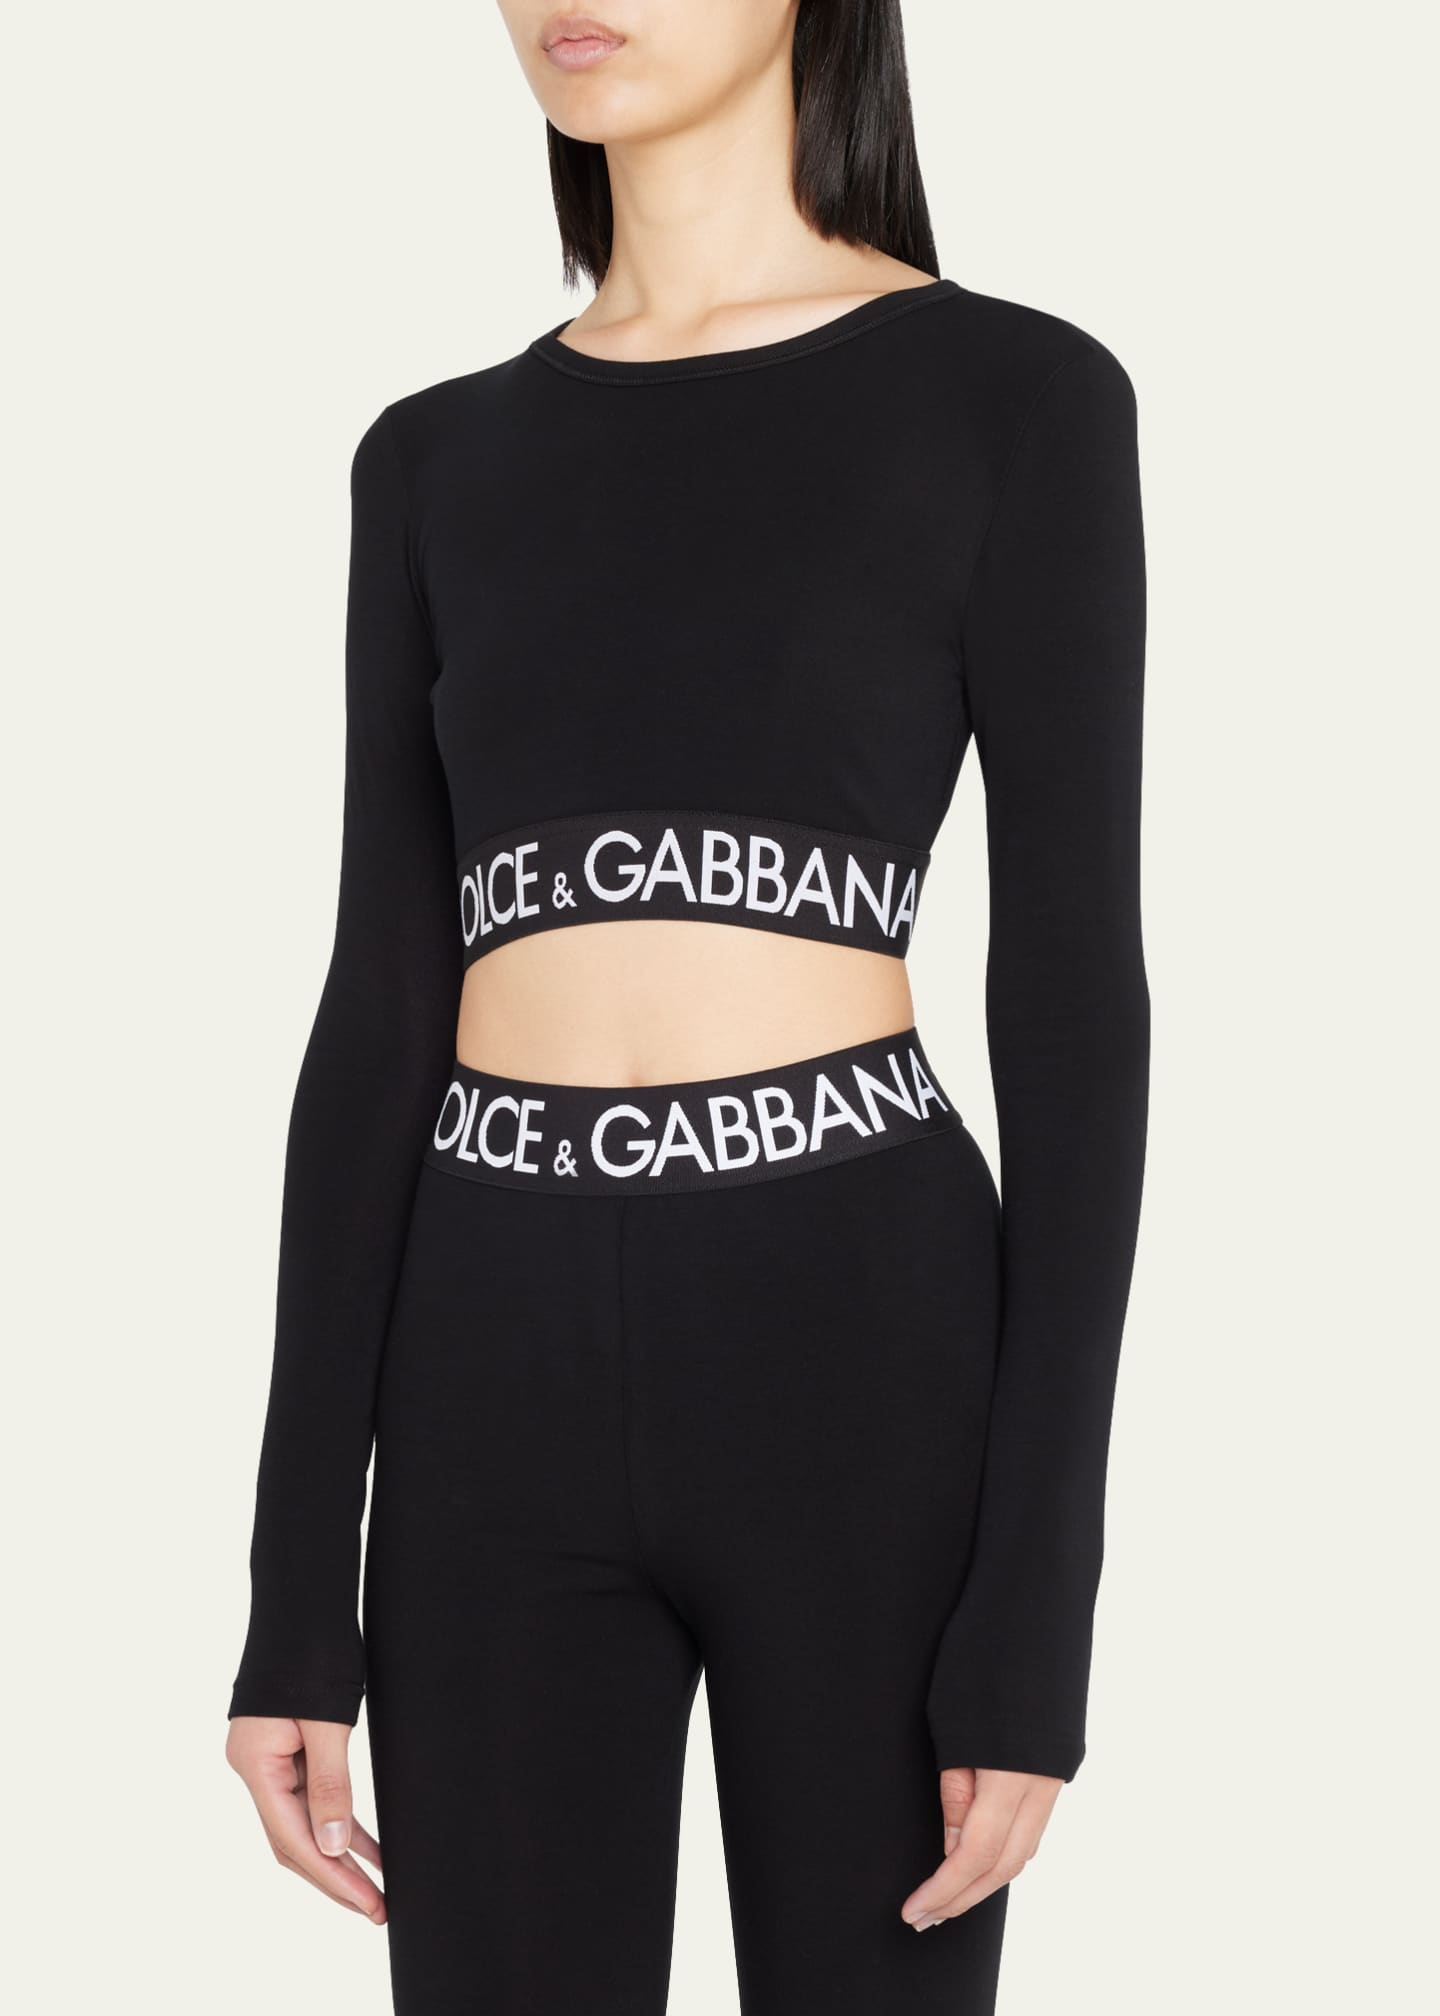 Dolce&Gabbana Branded Elastic Long-Sleeve Crop Top - Bergdorf Goodman